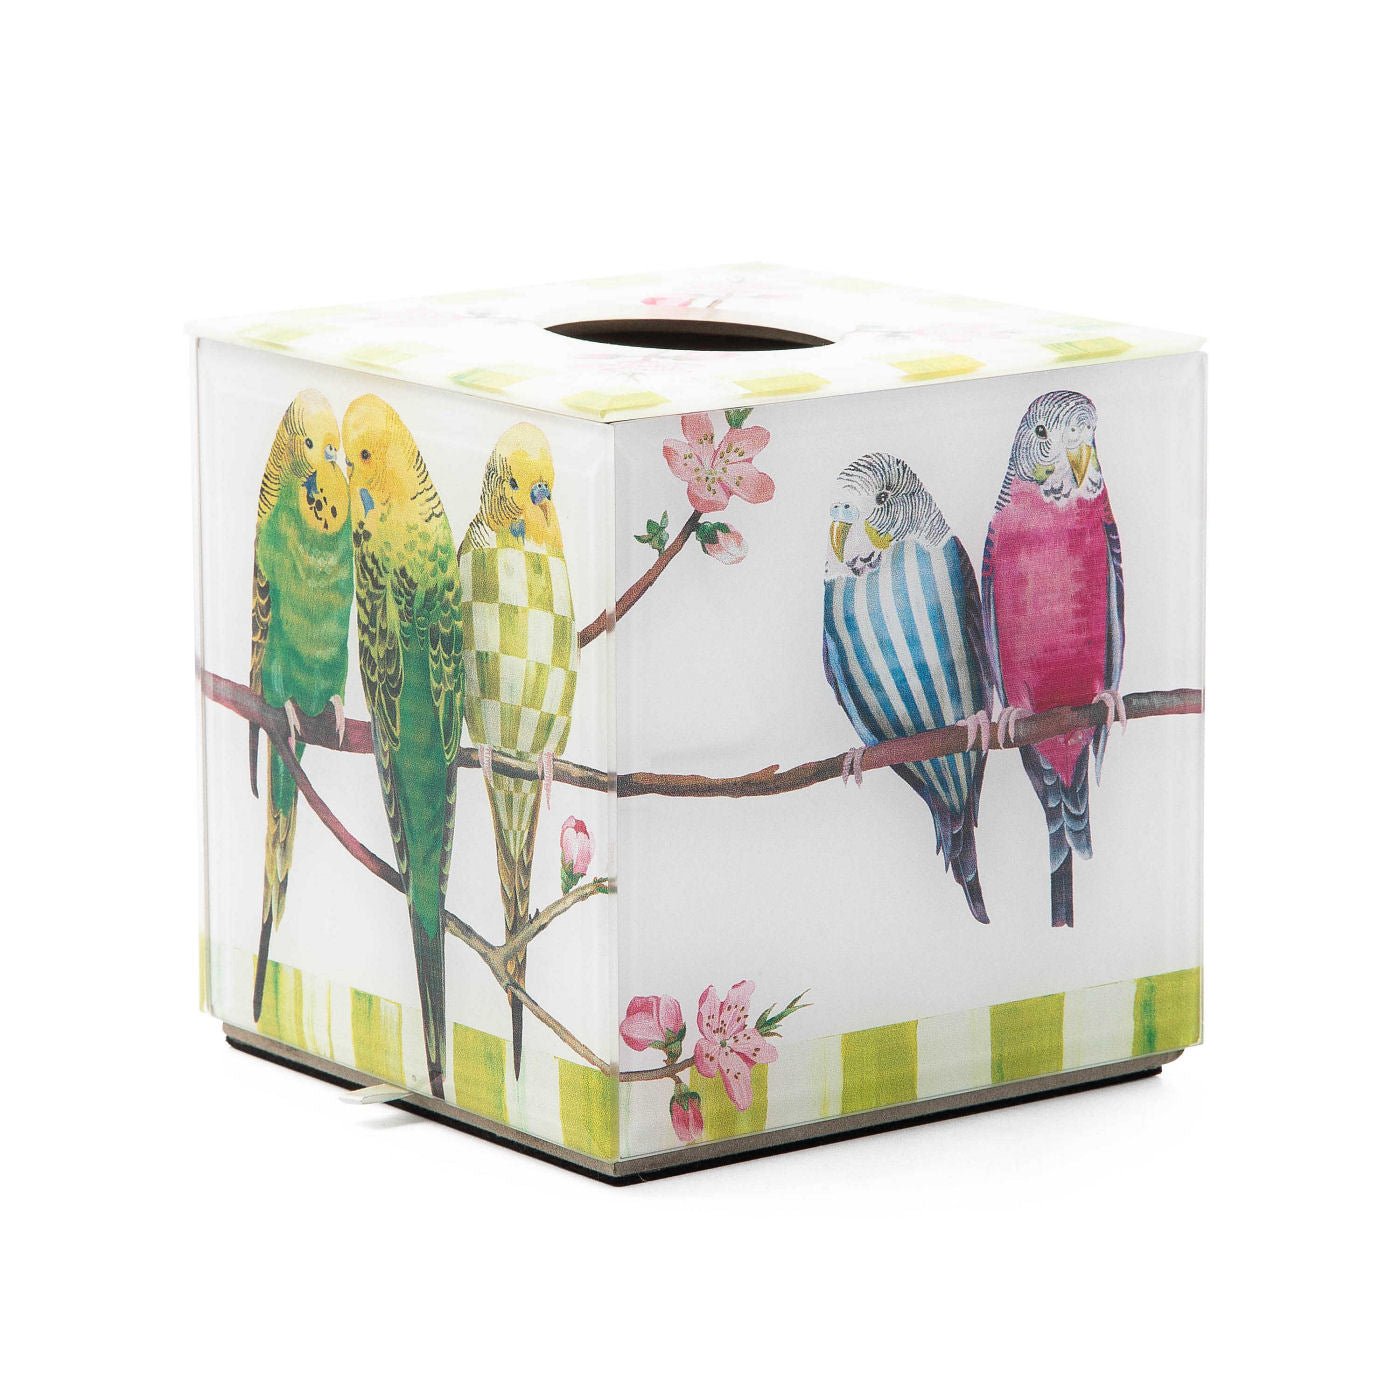 Parakeet Boutique Tissue Box Cover - |VESIMI Design| Luxury Bathrooms and Home Decor